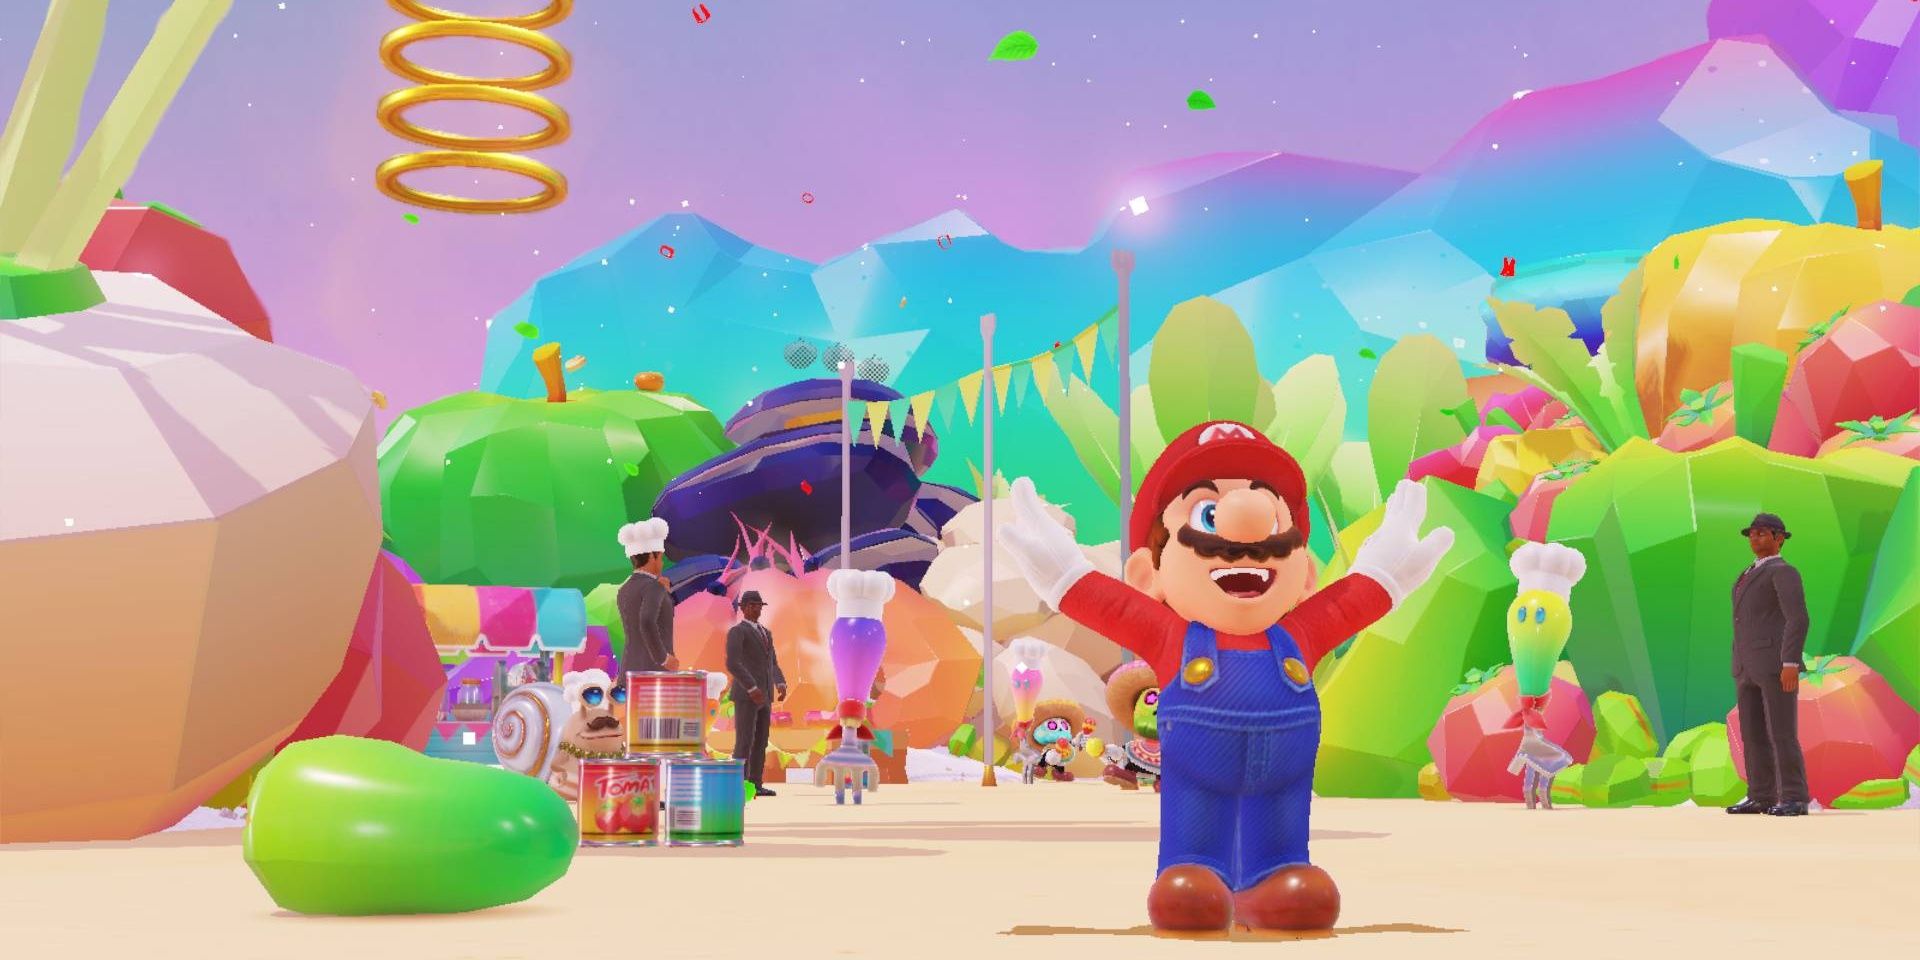 Mario sticking the landing in Luncheon Kingdom in Super Mario Odyssey